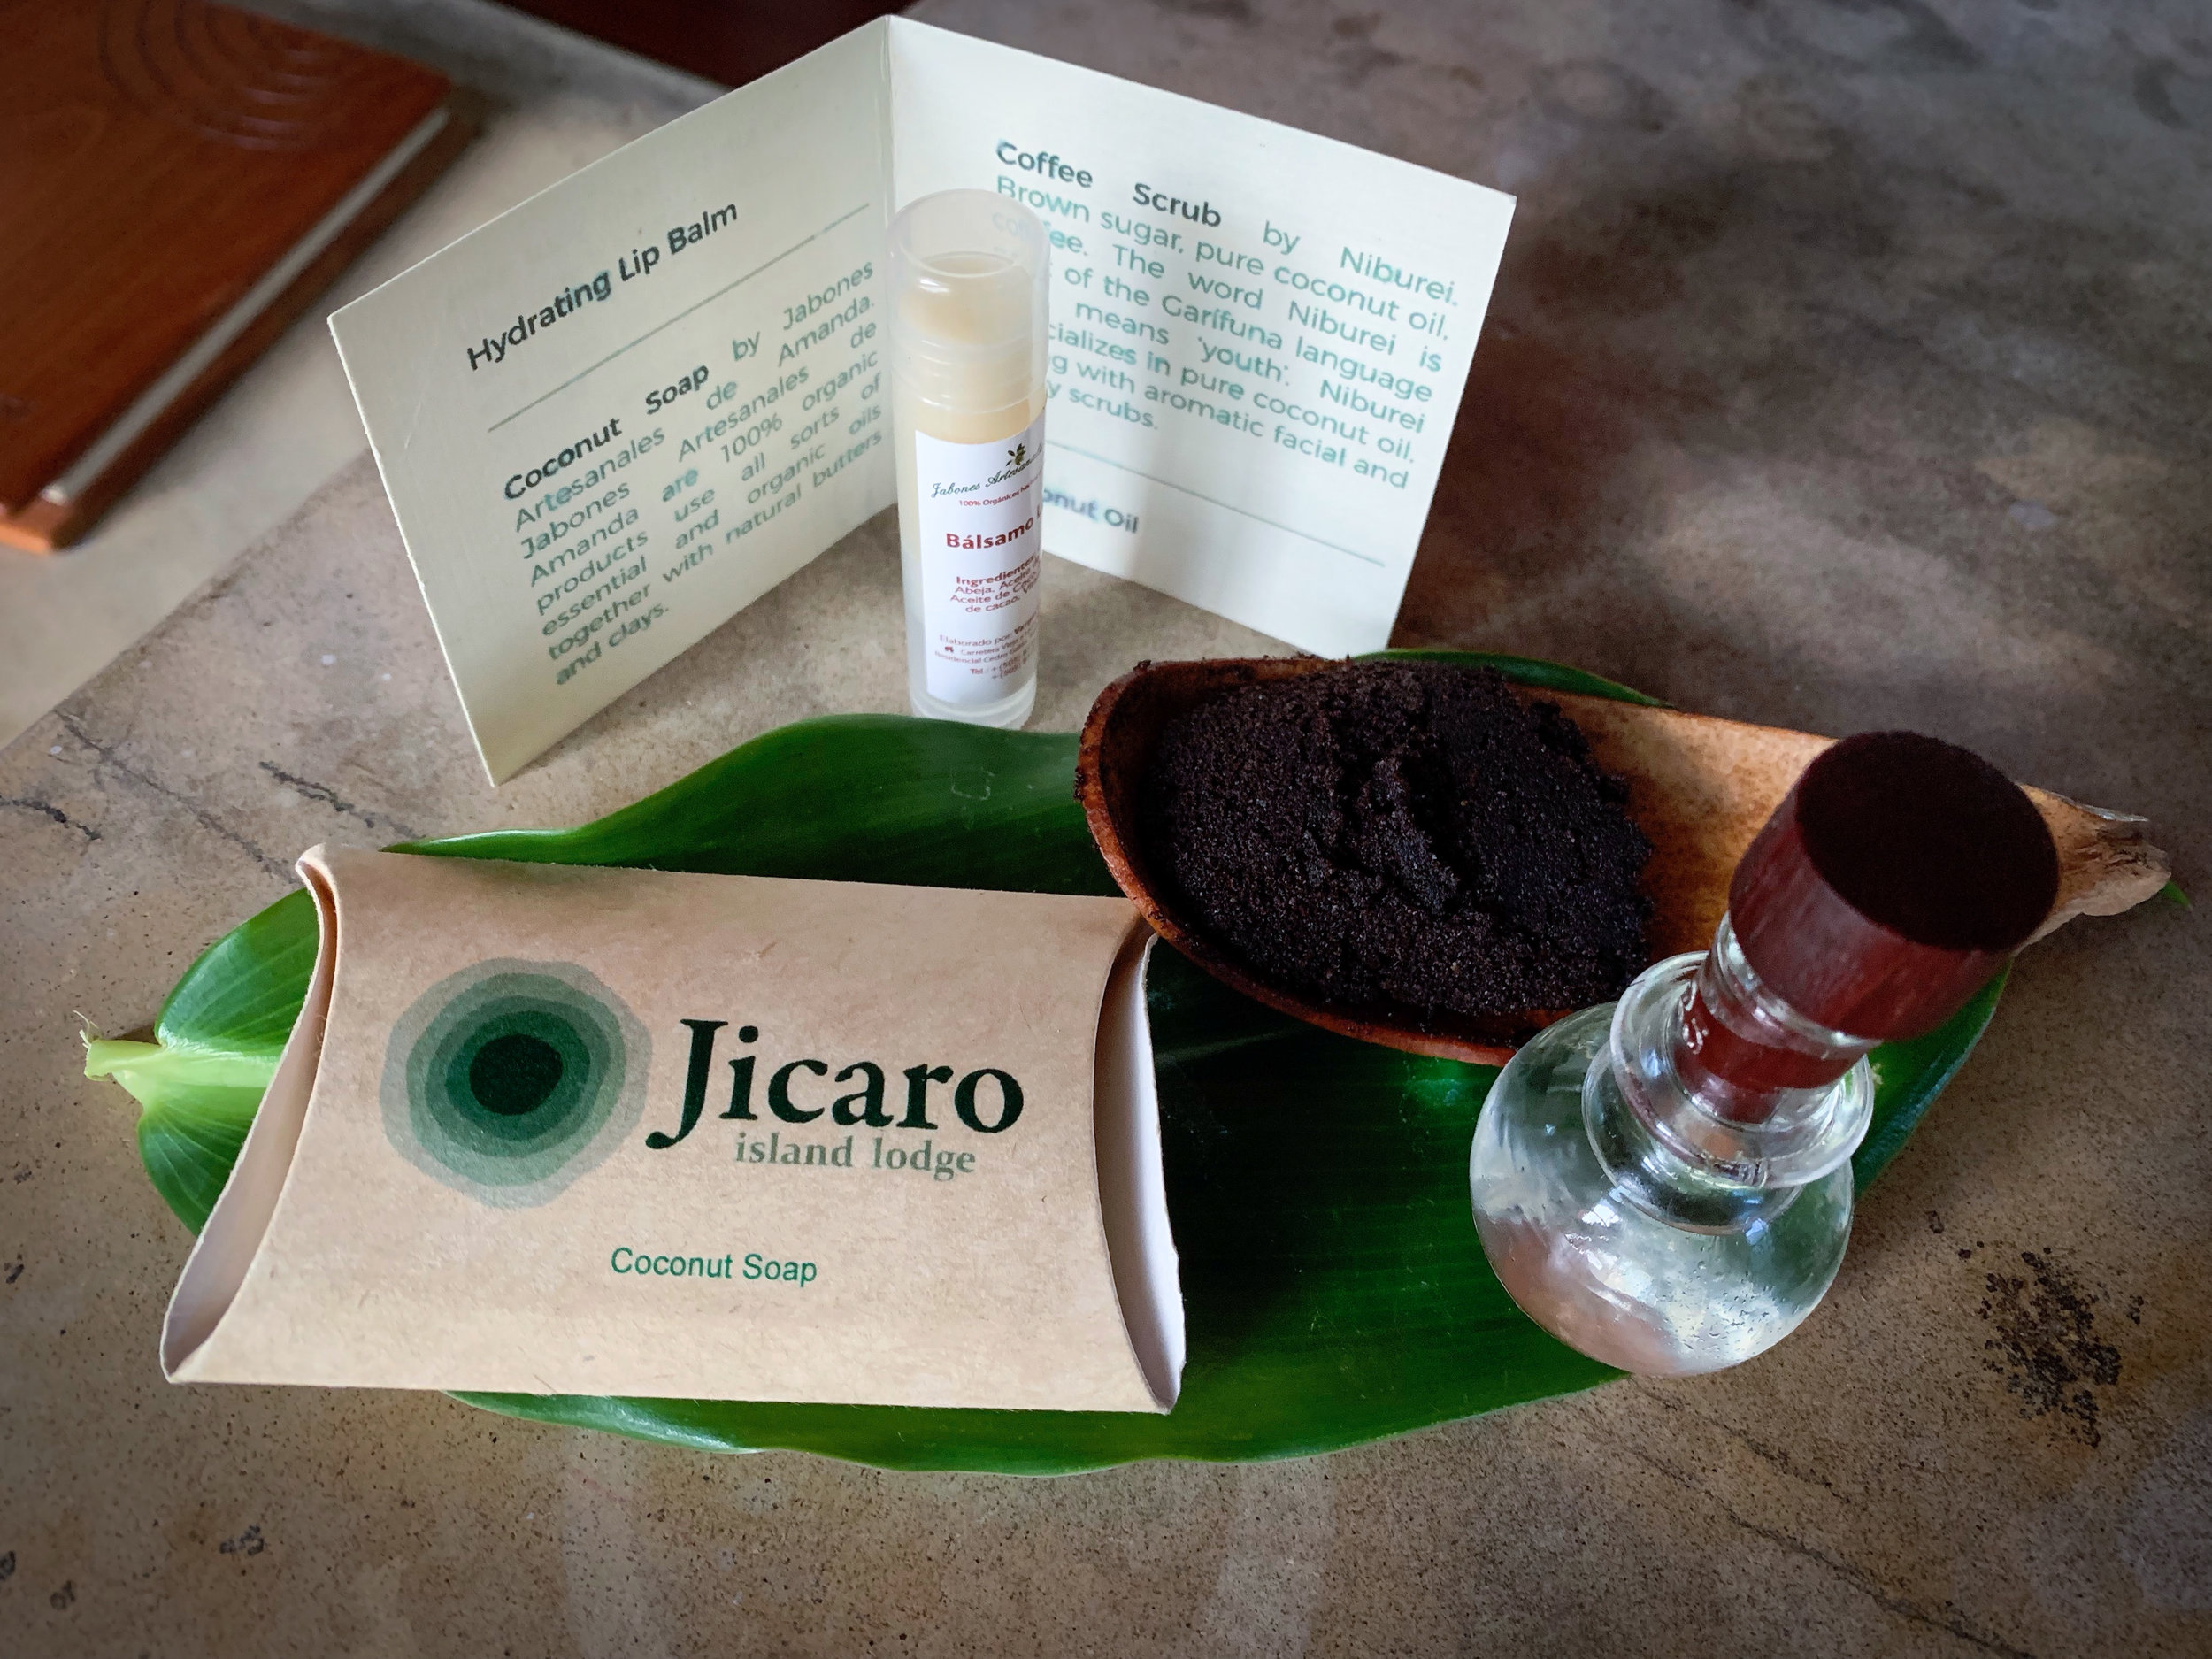 Welcome amenities handmade in Nicaragua. The coffee scrub is amazing!